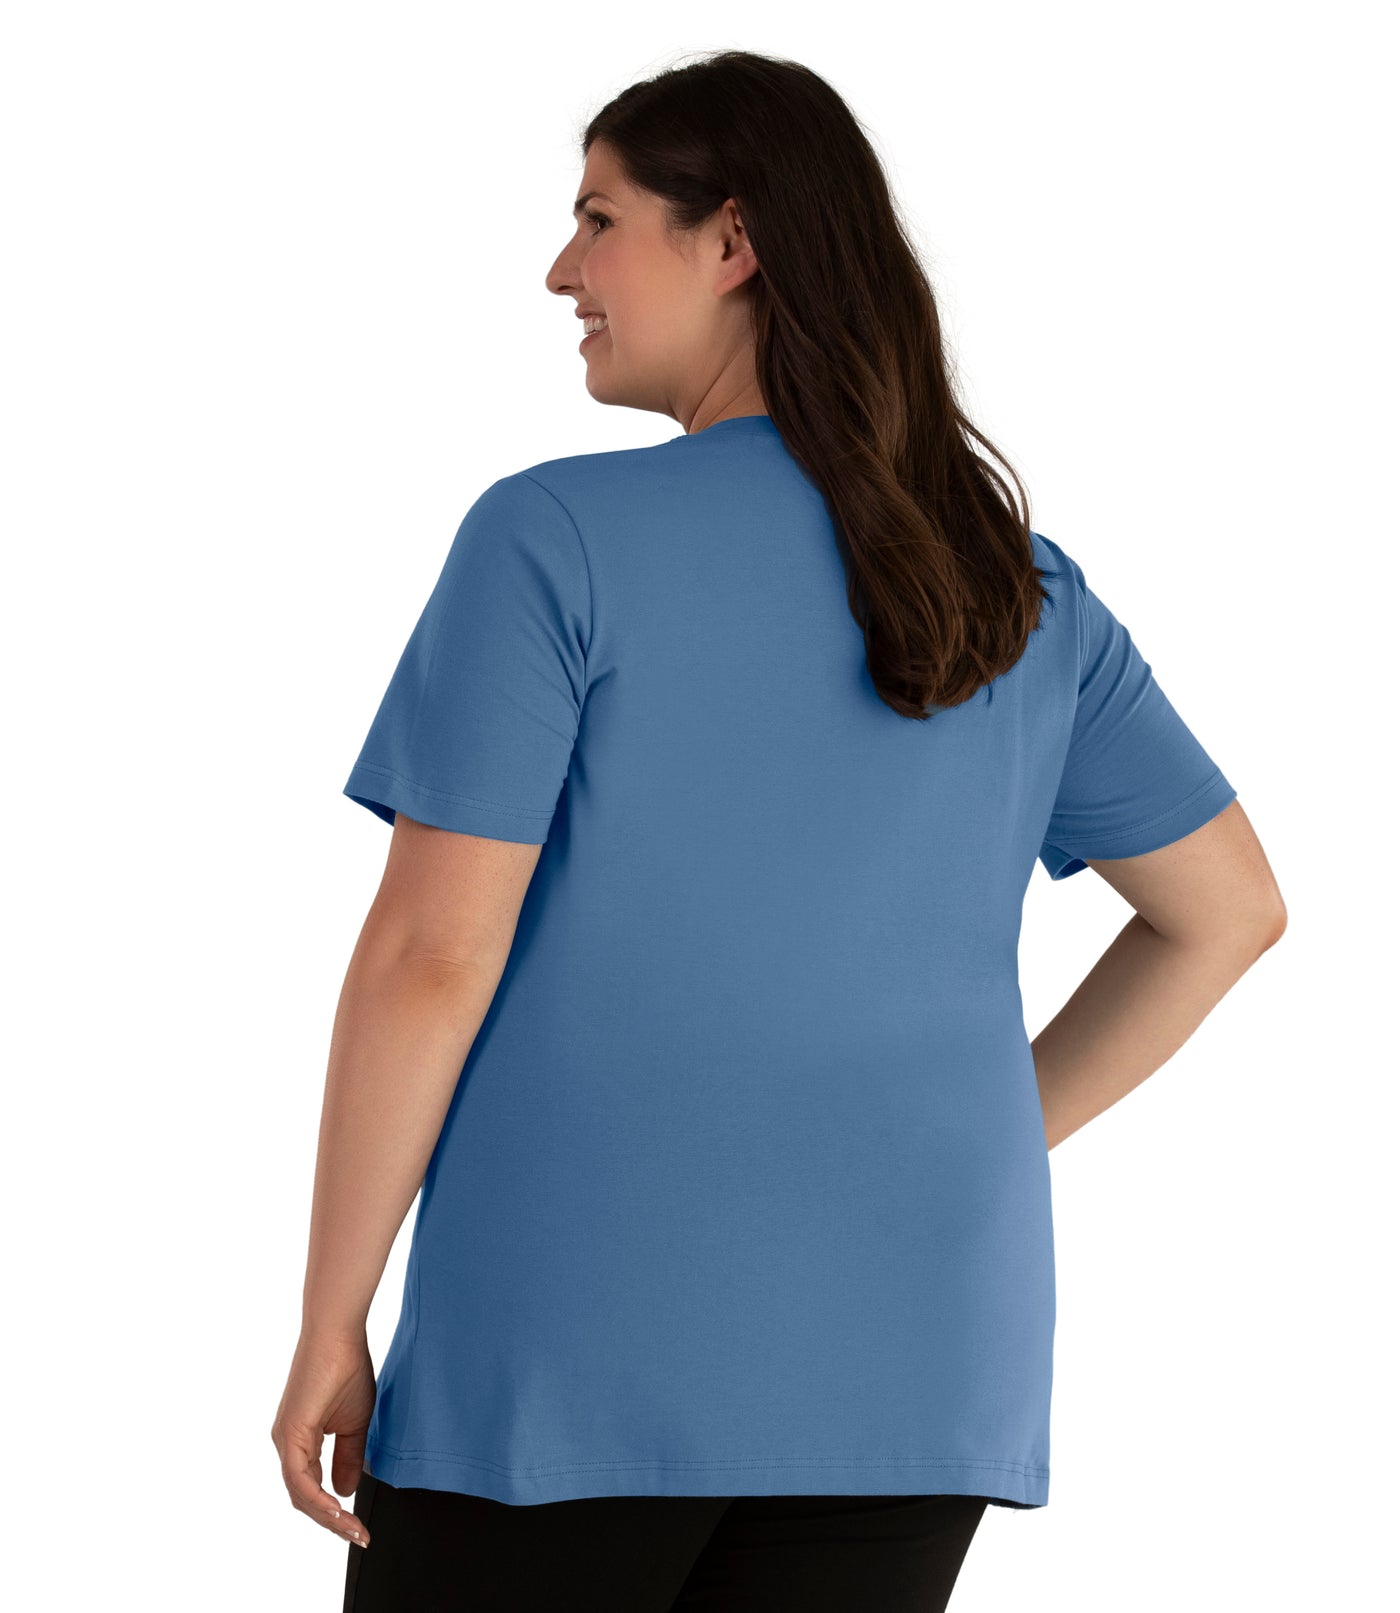 Back of model wearing JunoActive's Designer Graphic V-neck top with in color denim.